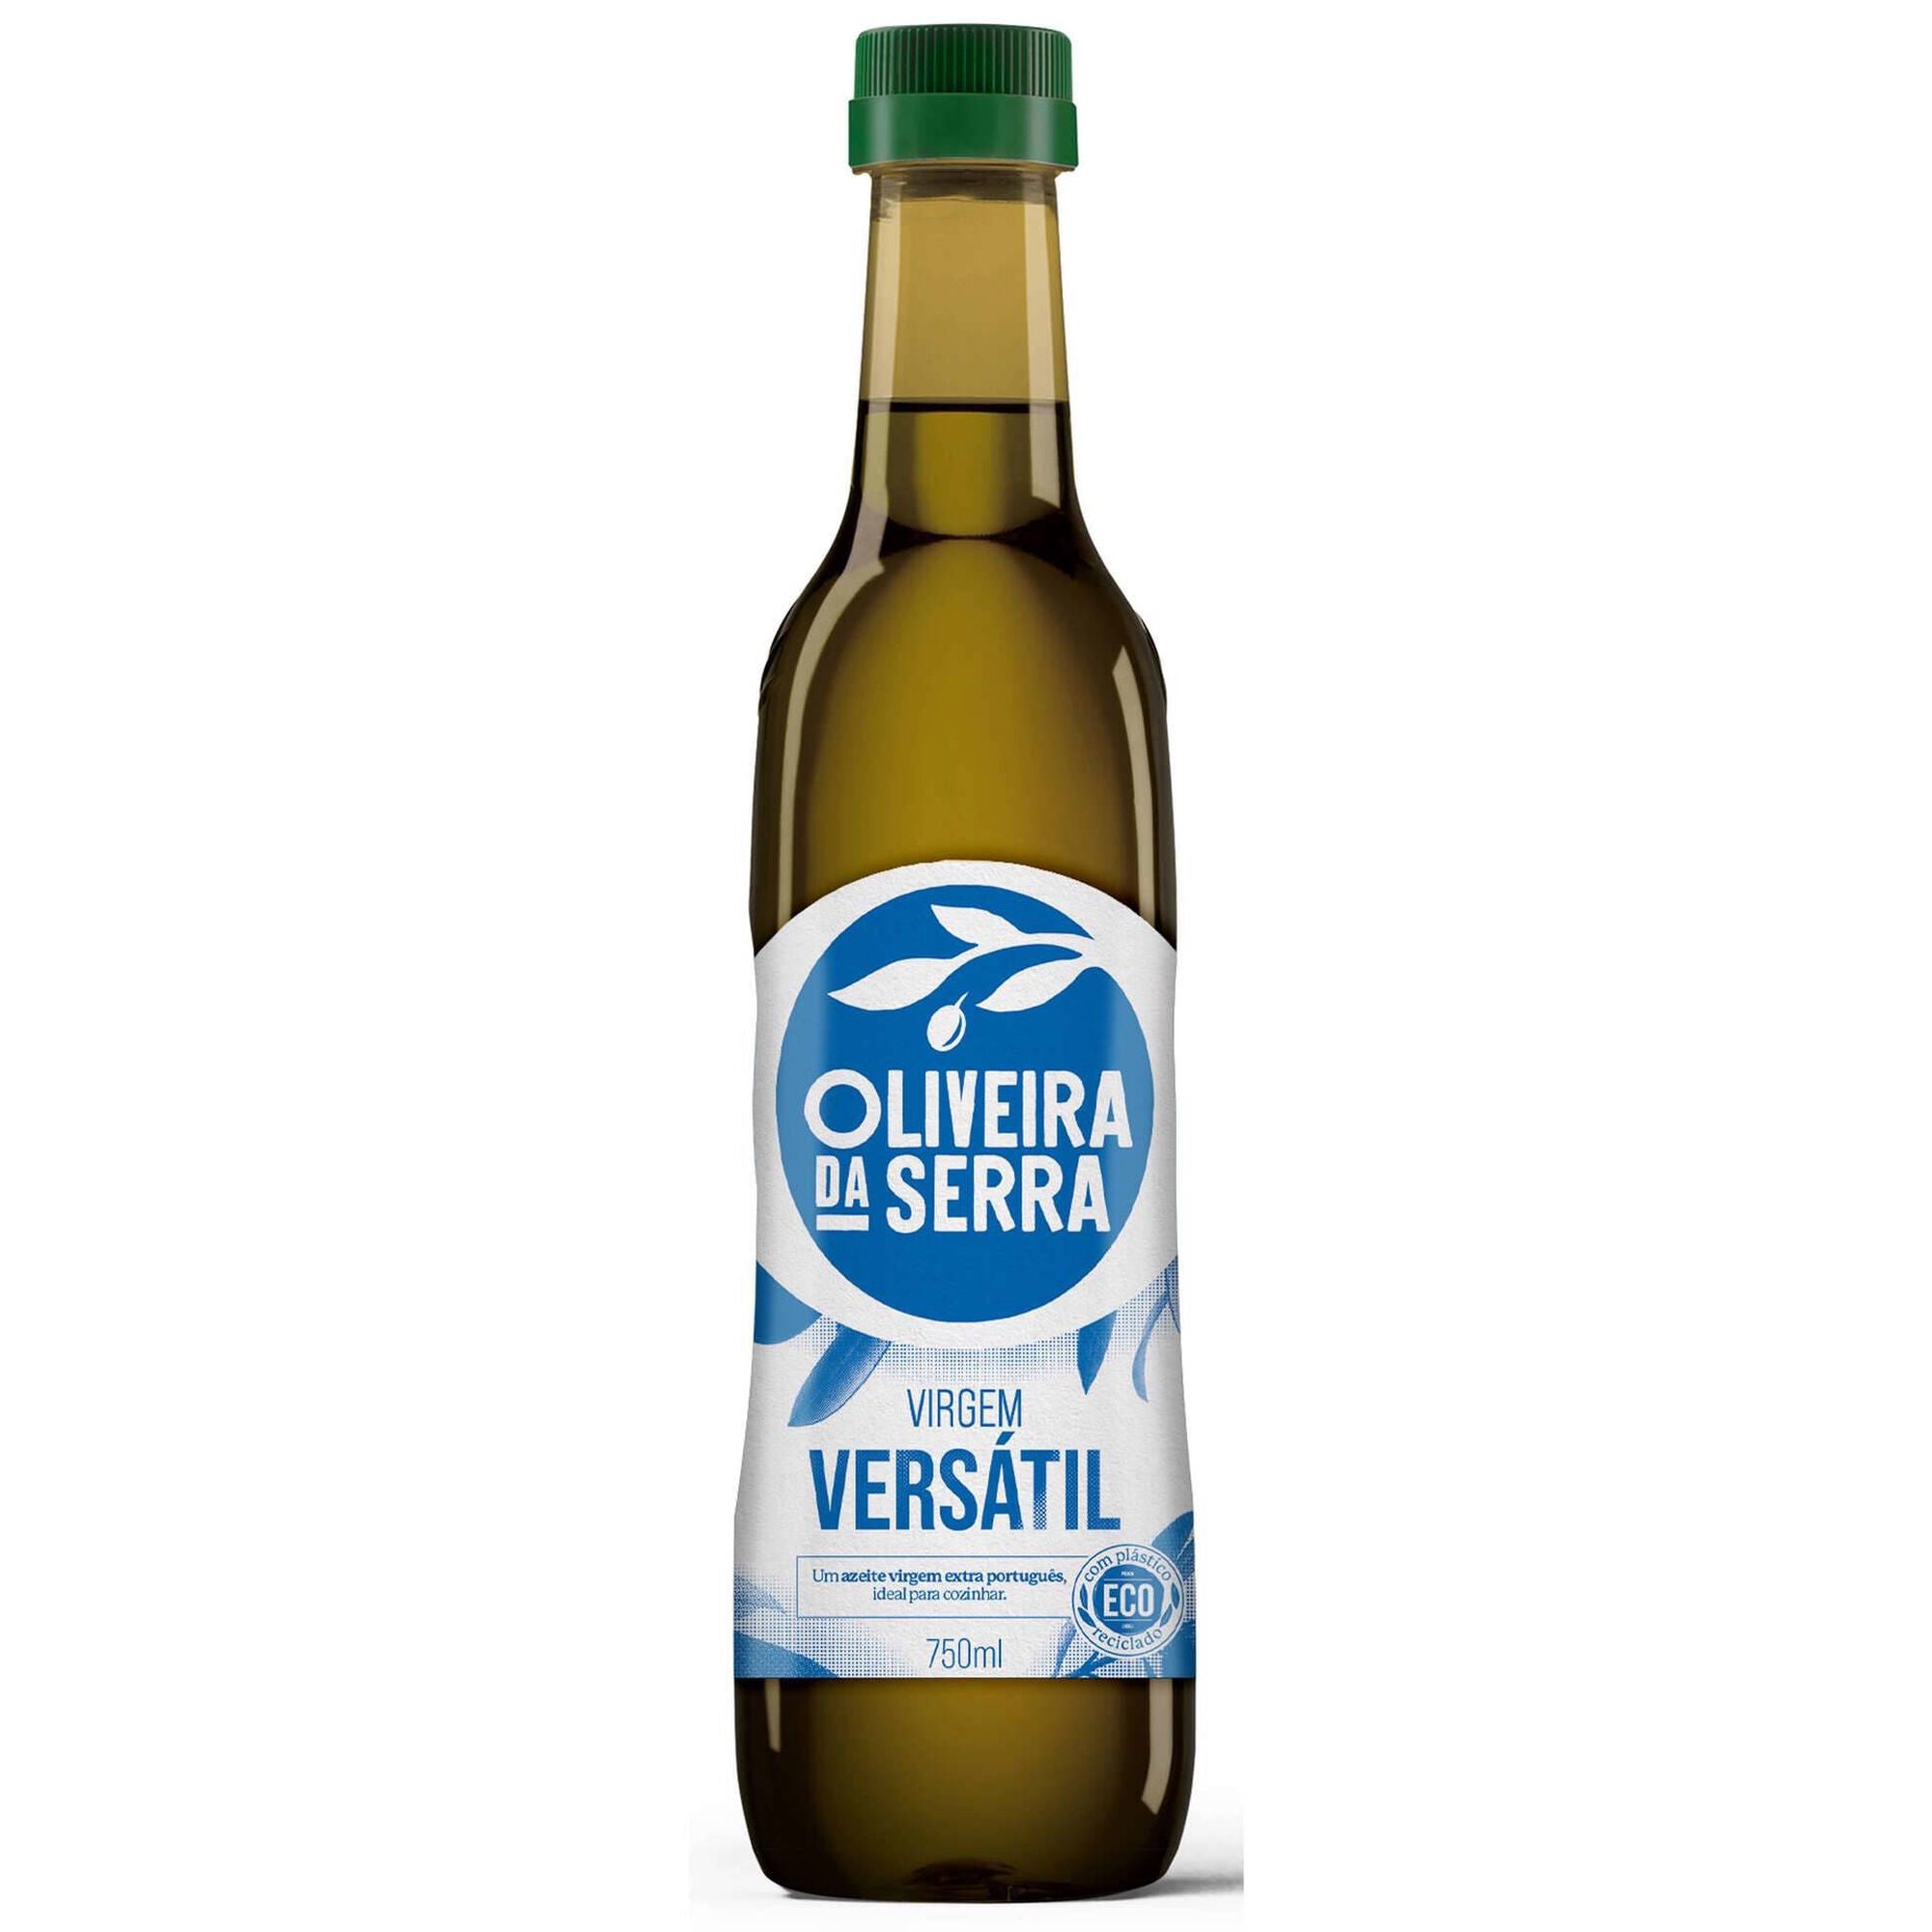 Versatile Virgin Olive Oil Oliveira da Serra 750ml